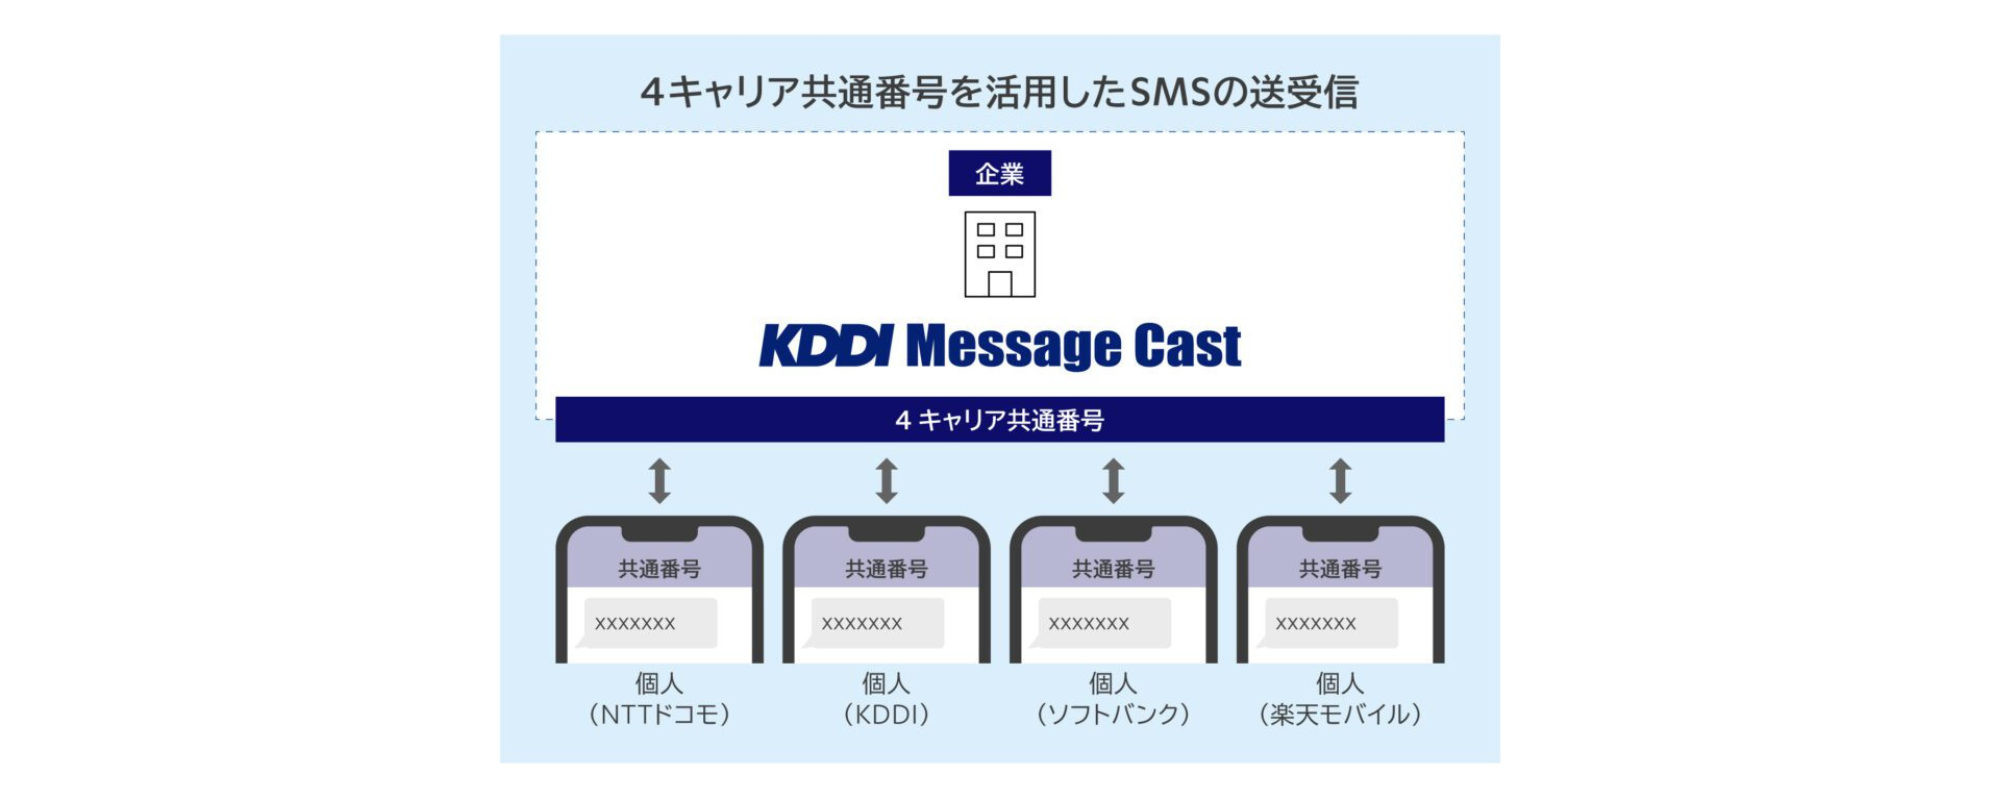 KDDI Message Castでは4キャリア共通番号 (NTTドコモ、KDDI、ソフトバンク、楽天モバイル) を活用して企業と個人のお客さま間でSMSの送受信ができます。